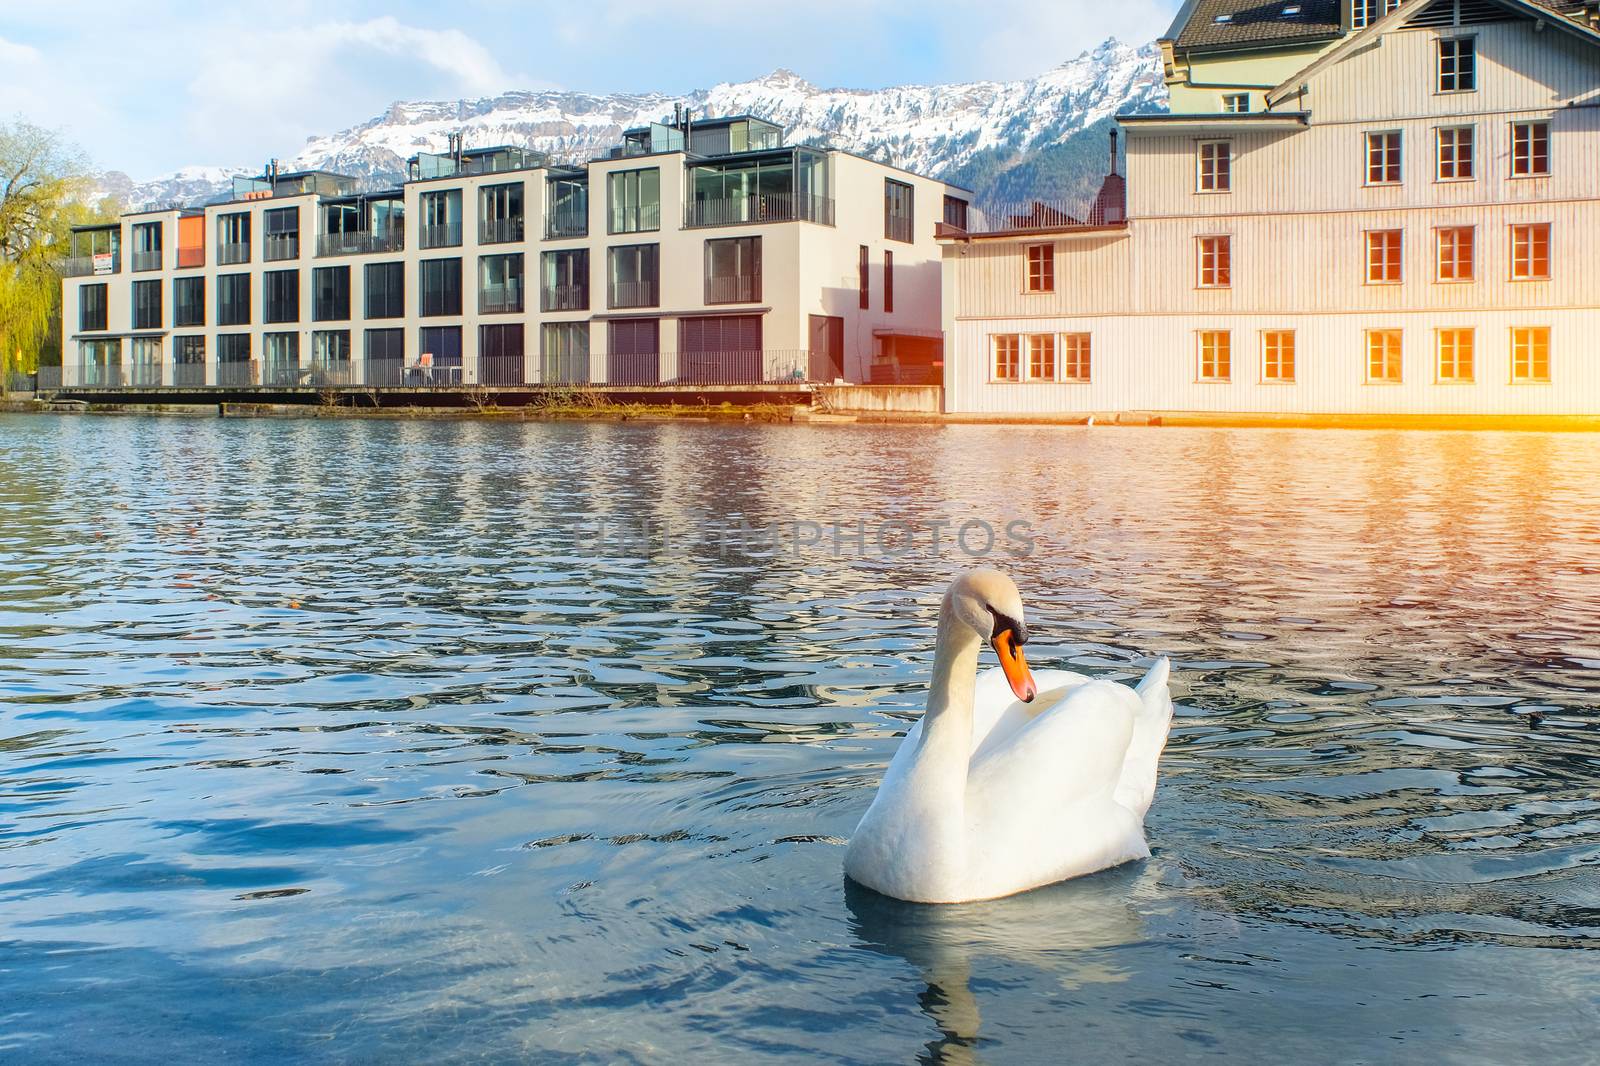 Swimming swan in sunlight at Interlaken,Switzerland by Surasak